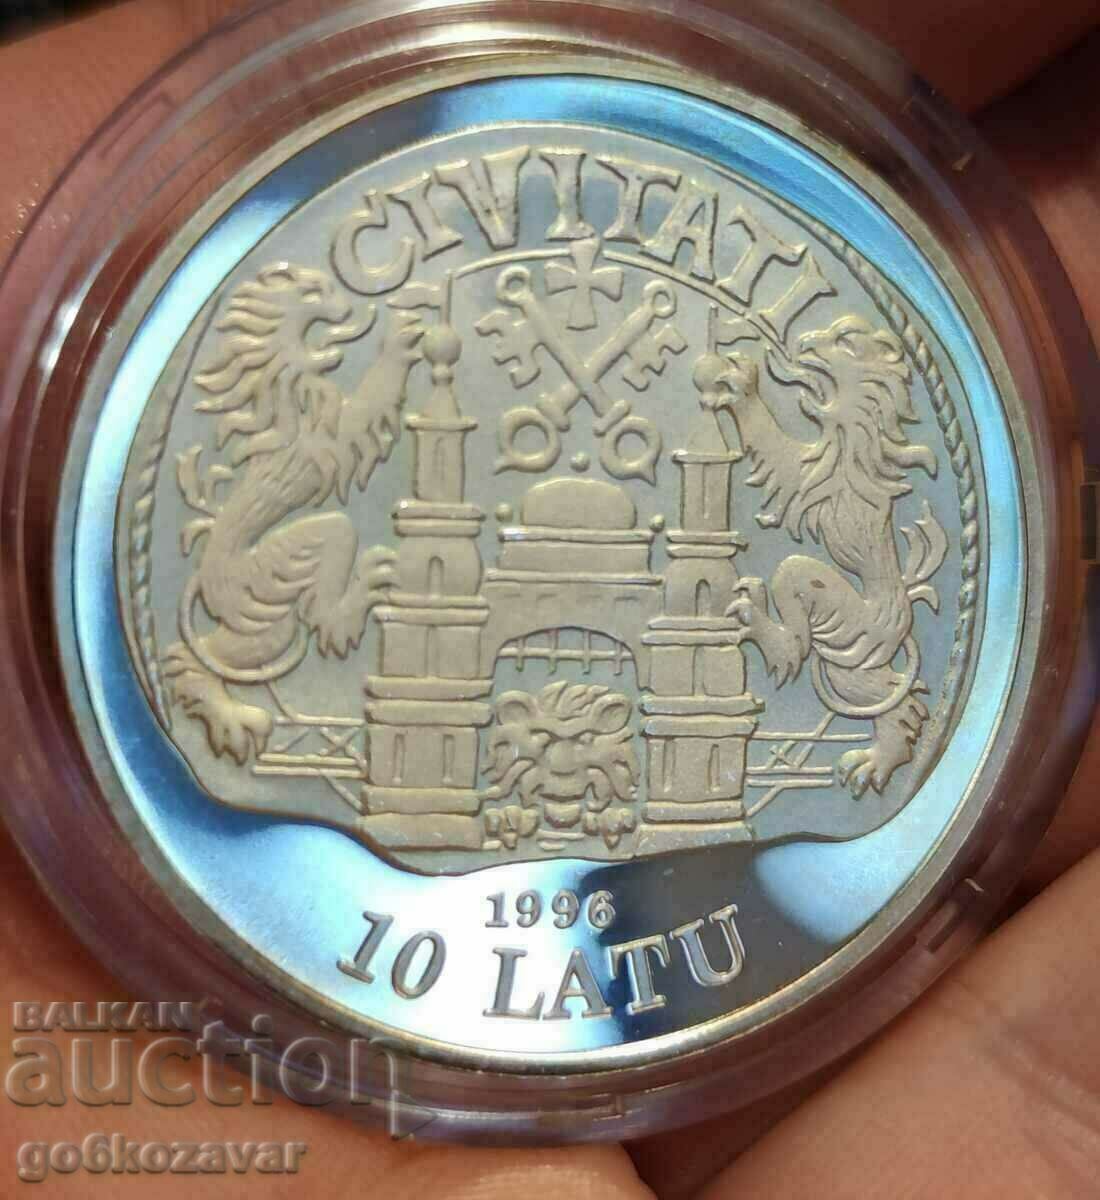 Latvia 10 Latu 1996 Silver 0.925 Proof UNC